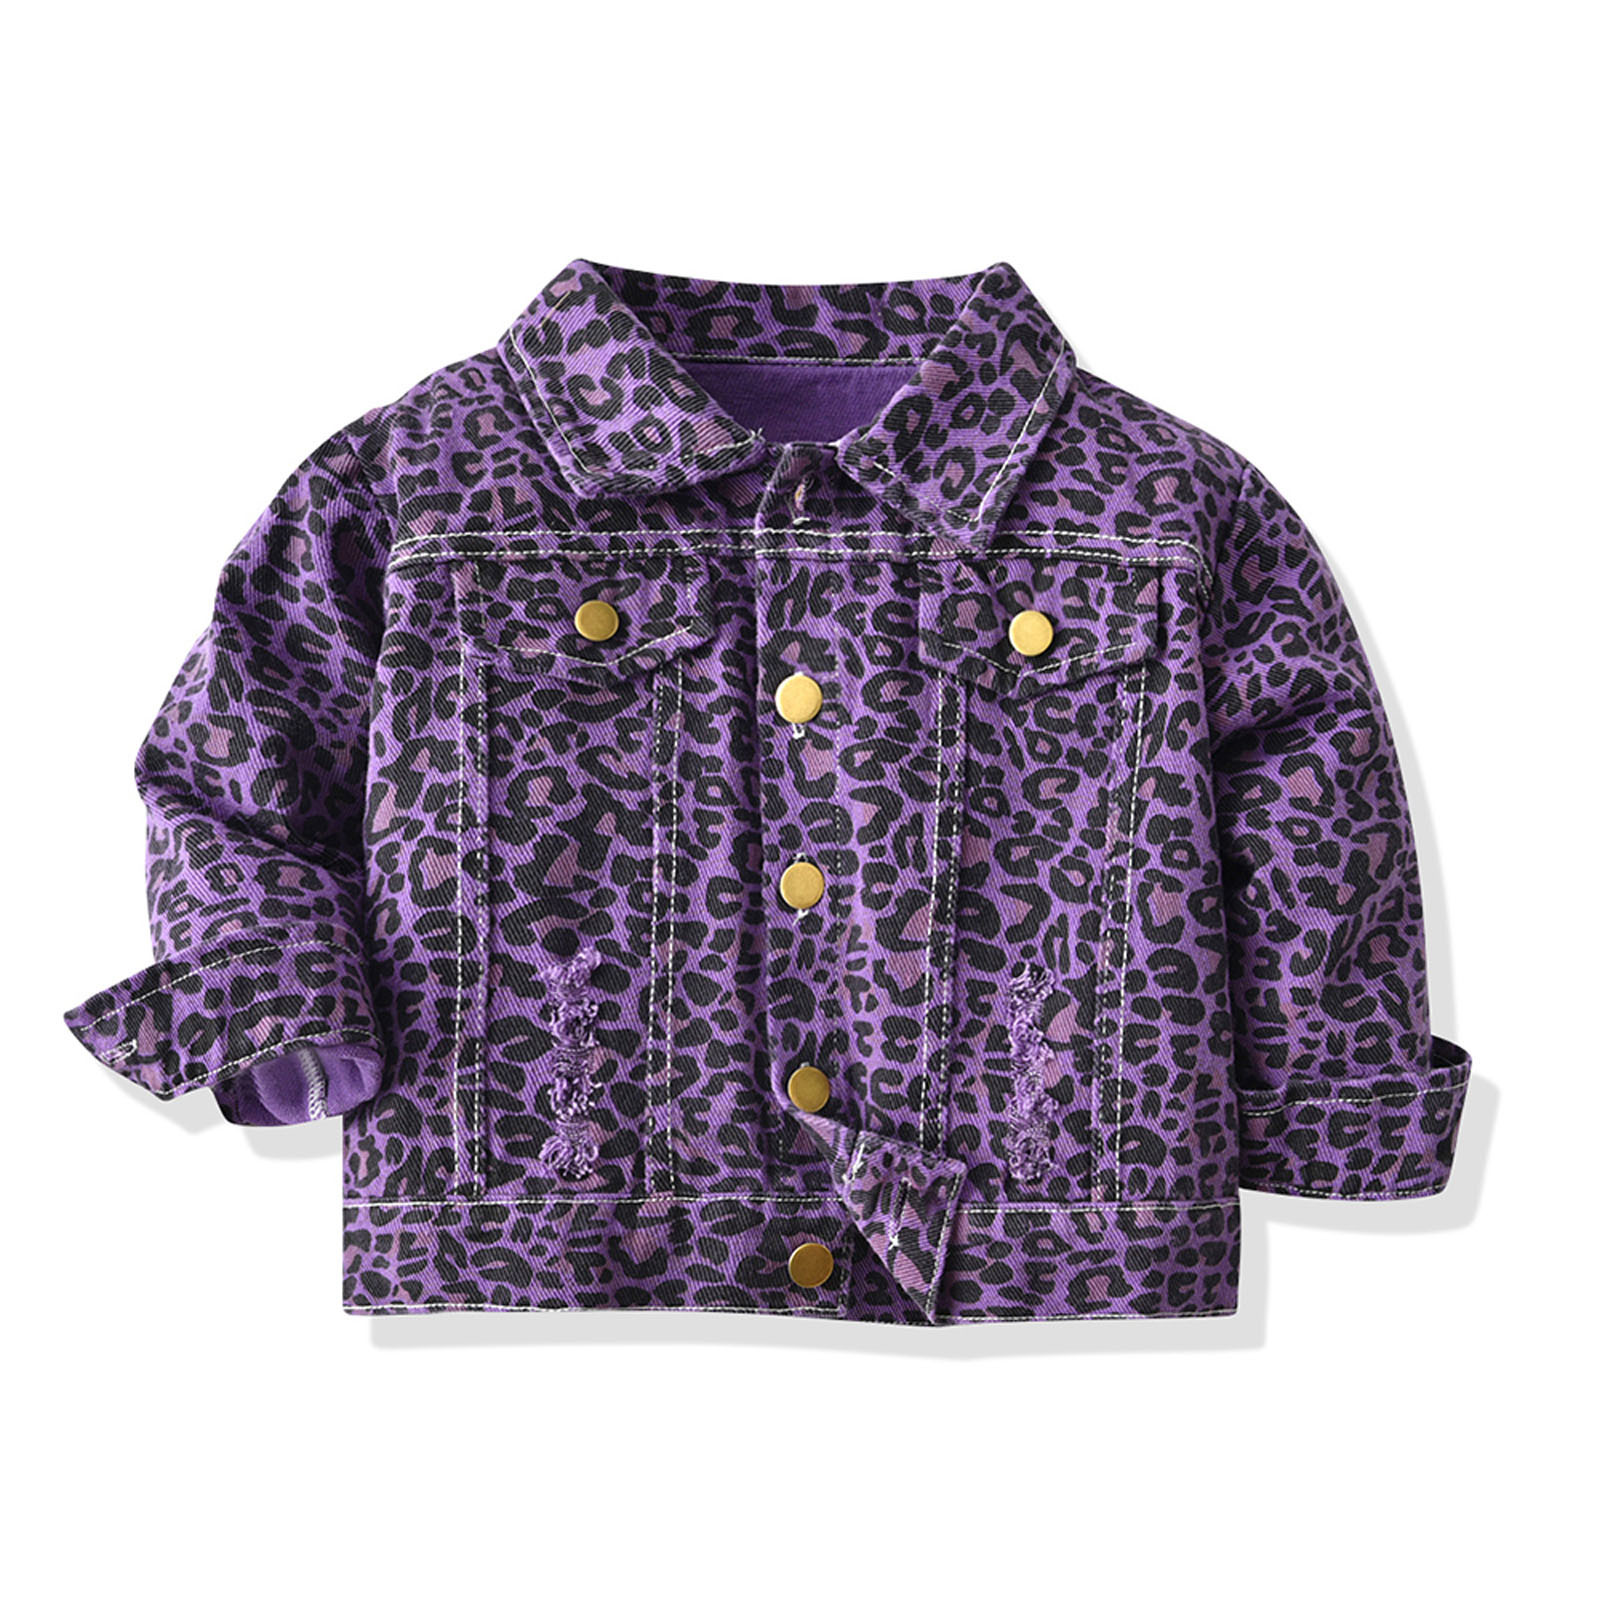 Dadaria Toddler Jacket 3Months-6Years Fashion Kids Coat Boys Girls Thick Coat Denim Print Jacket Clothes Children's Jacket Purple 4-5 Years,Toddler - image 2 of 9